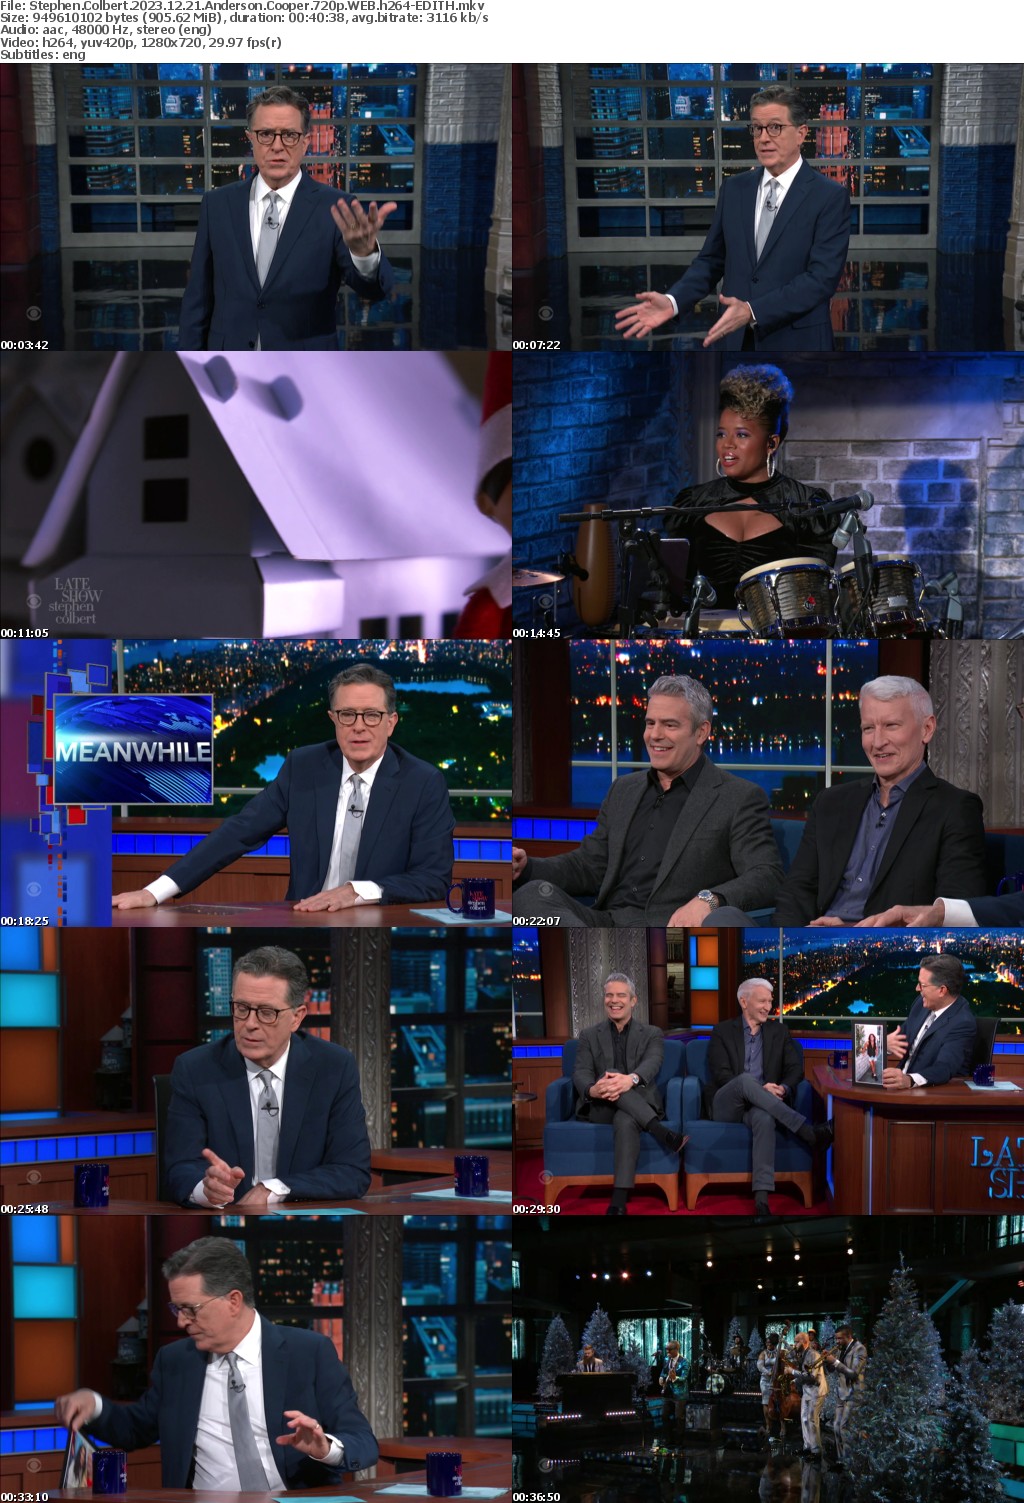 Stephen Colbert 2023 12 21 Anderson Cooper 720p WEB h264-EDITH